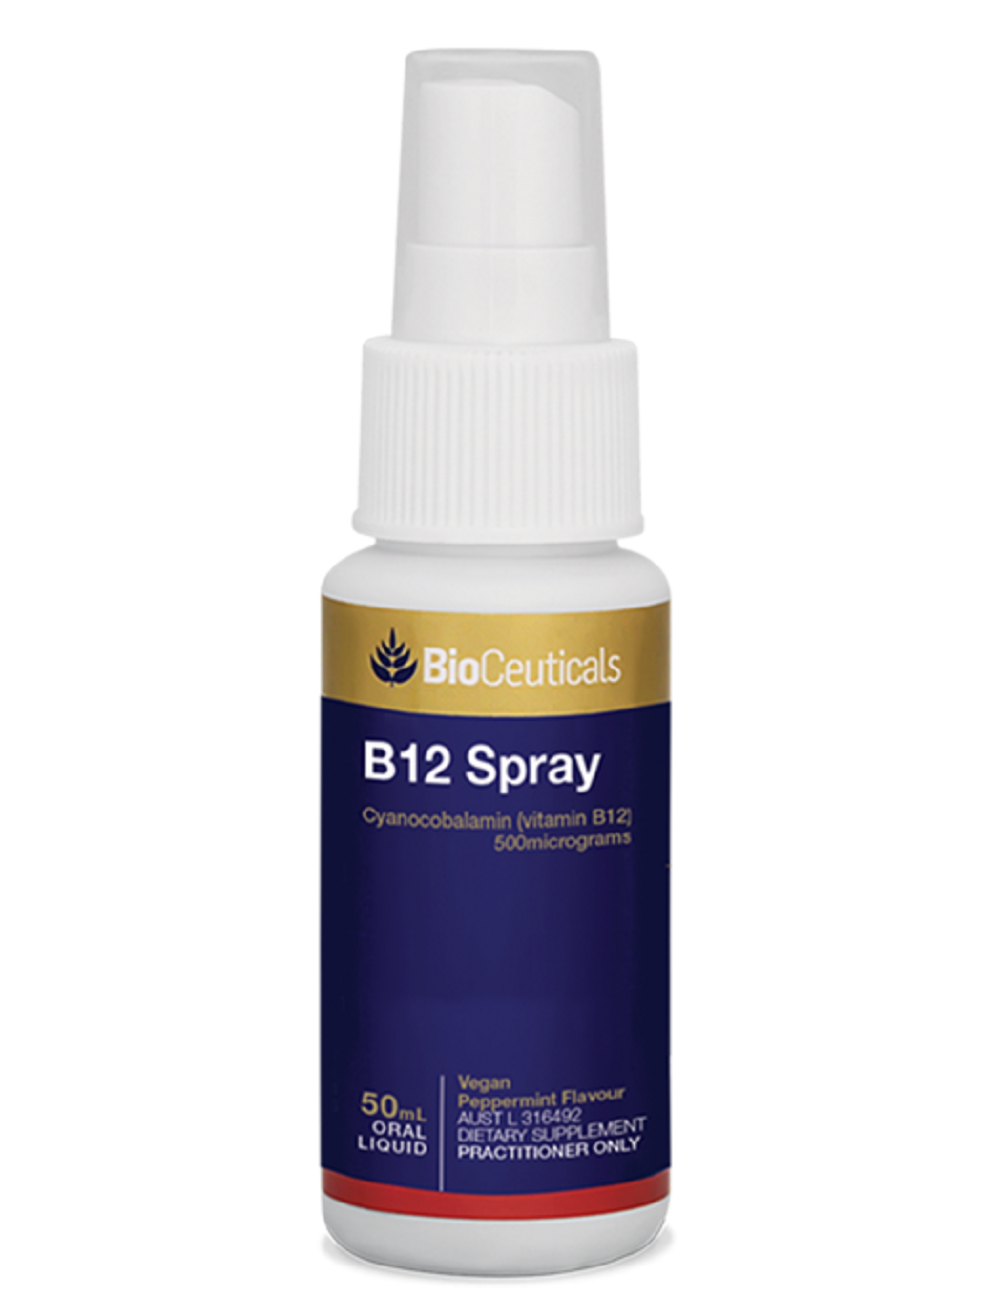 BioCeuticals B12 Spray 50mL oral liquid